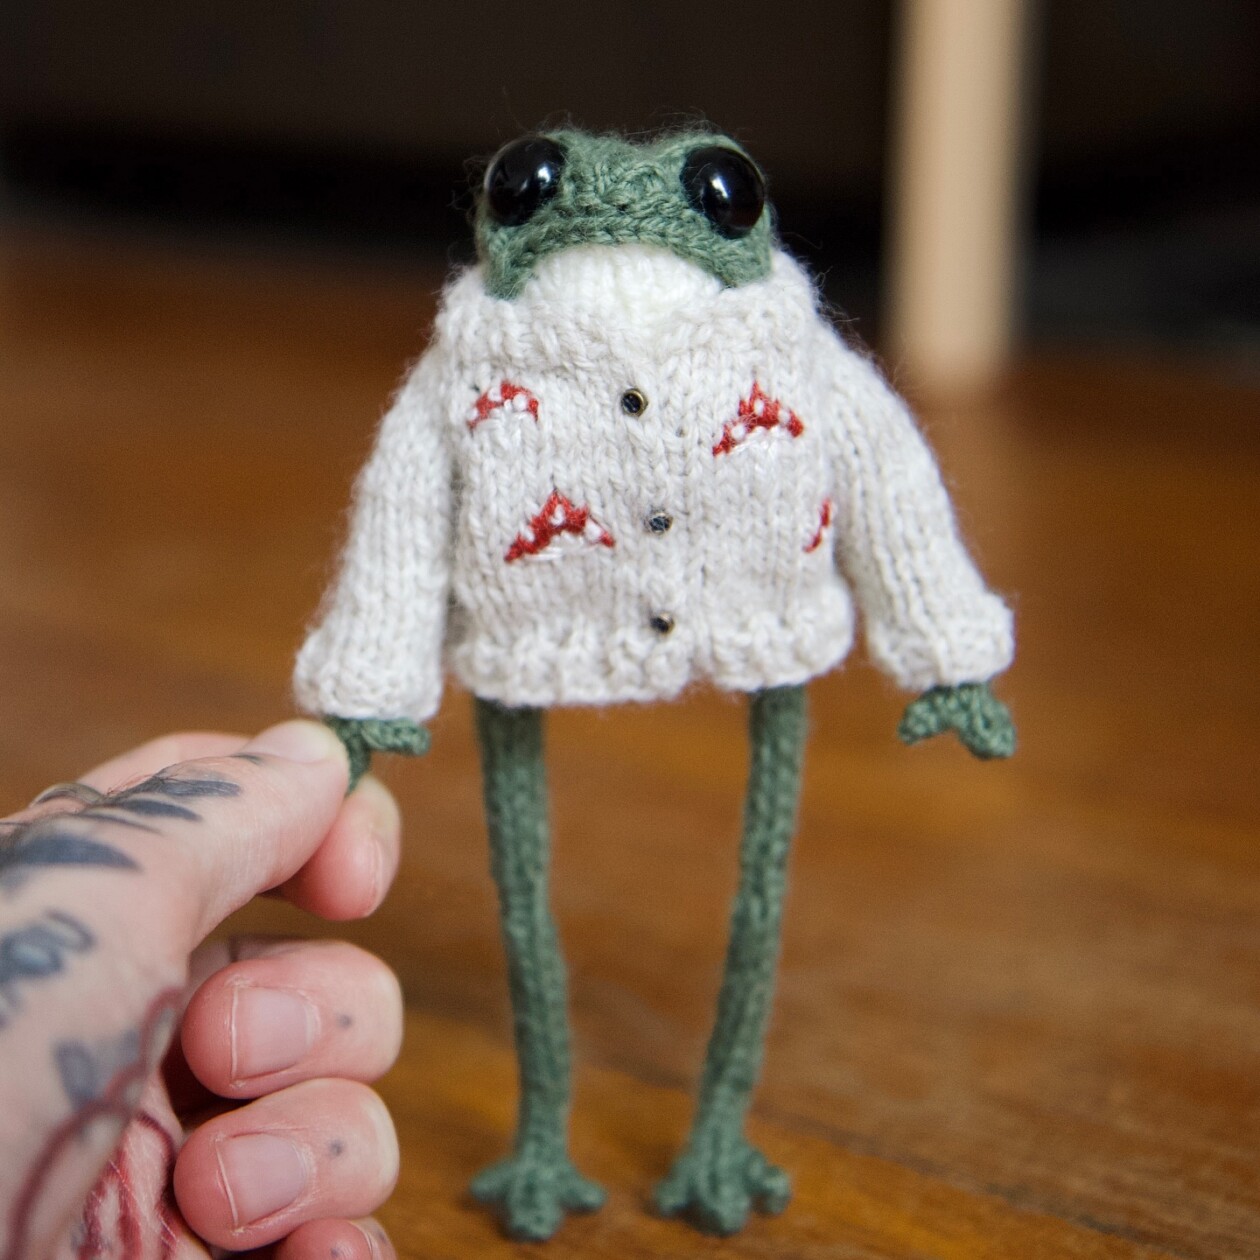 Enchanting Anthropomorphized Frog Crochet Patterns By Elliot (16)